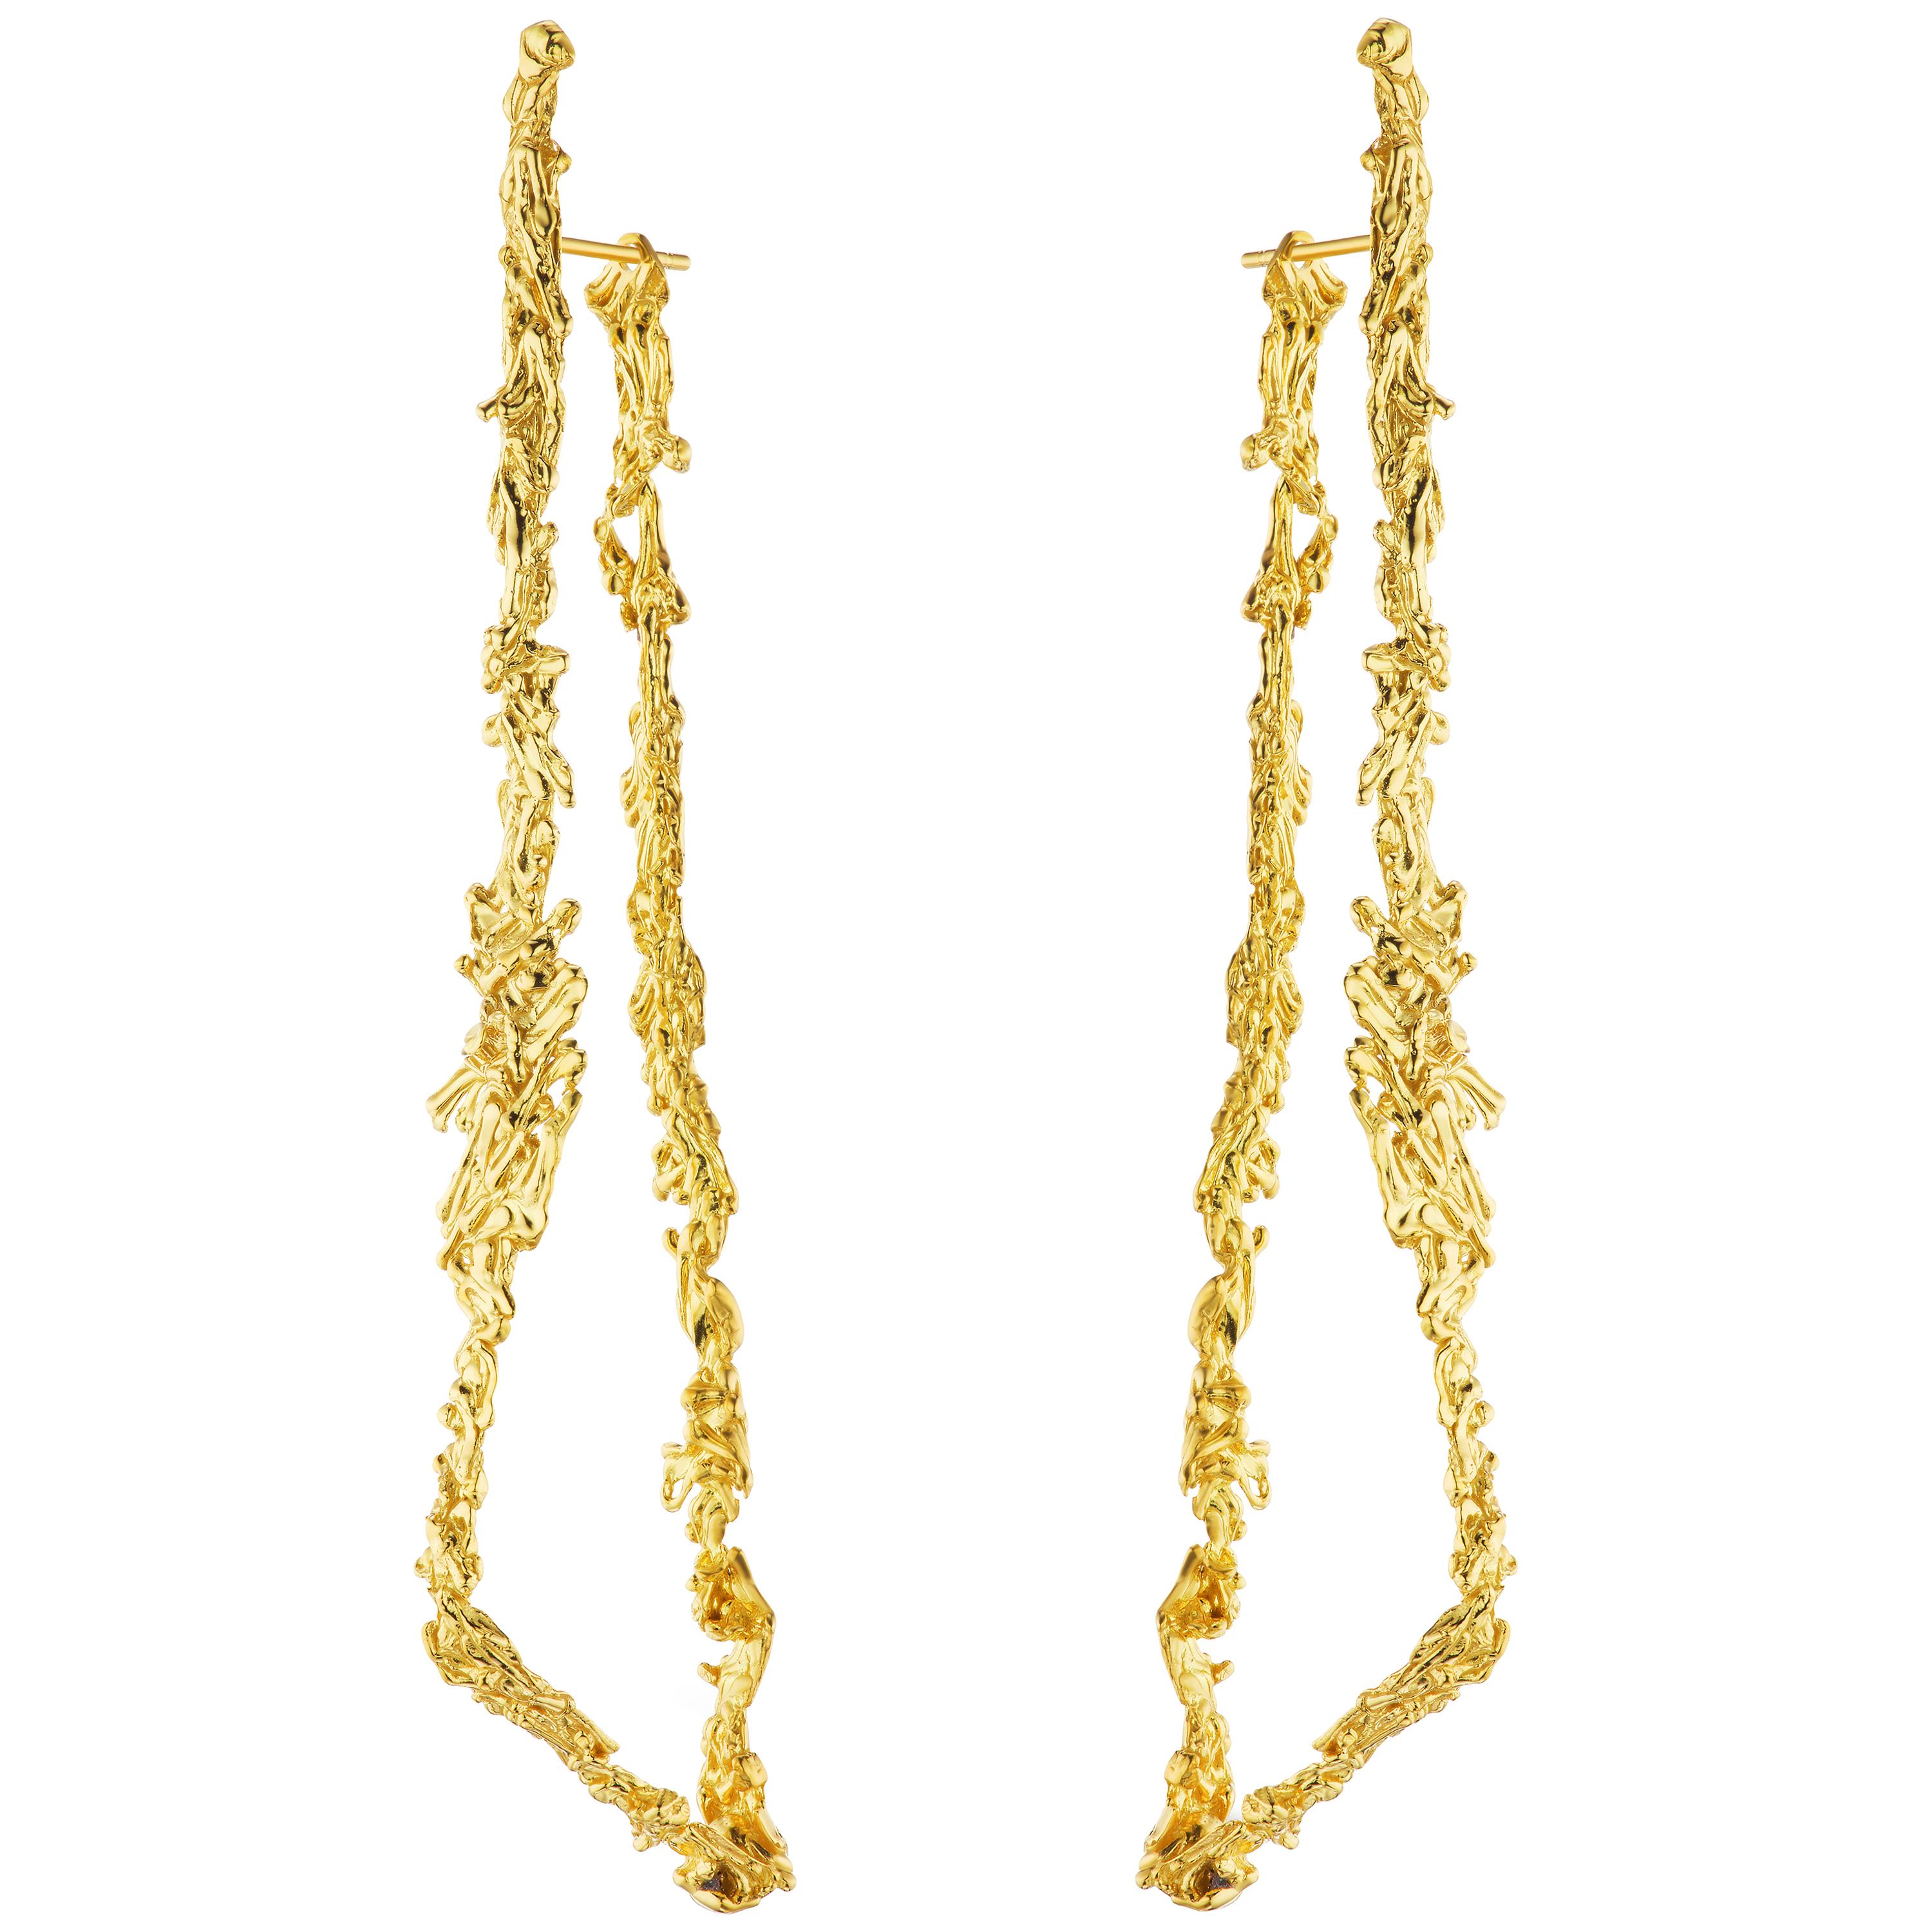 Jacqueline Barbosa 18 Karat Gold "S" Earrings